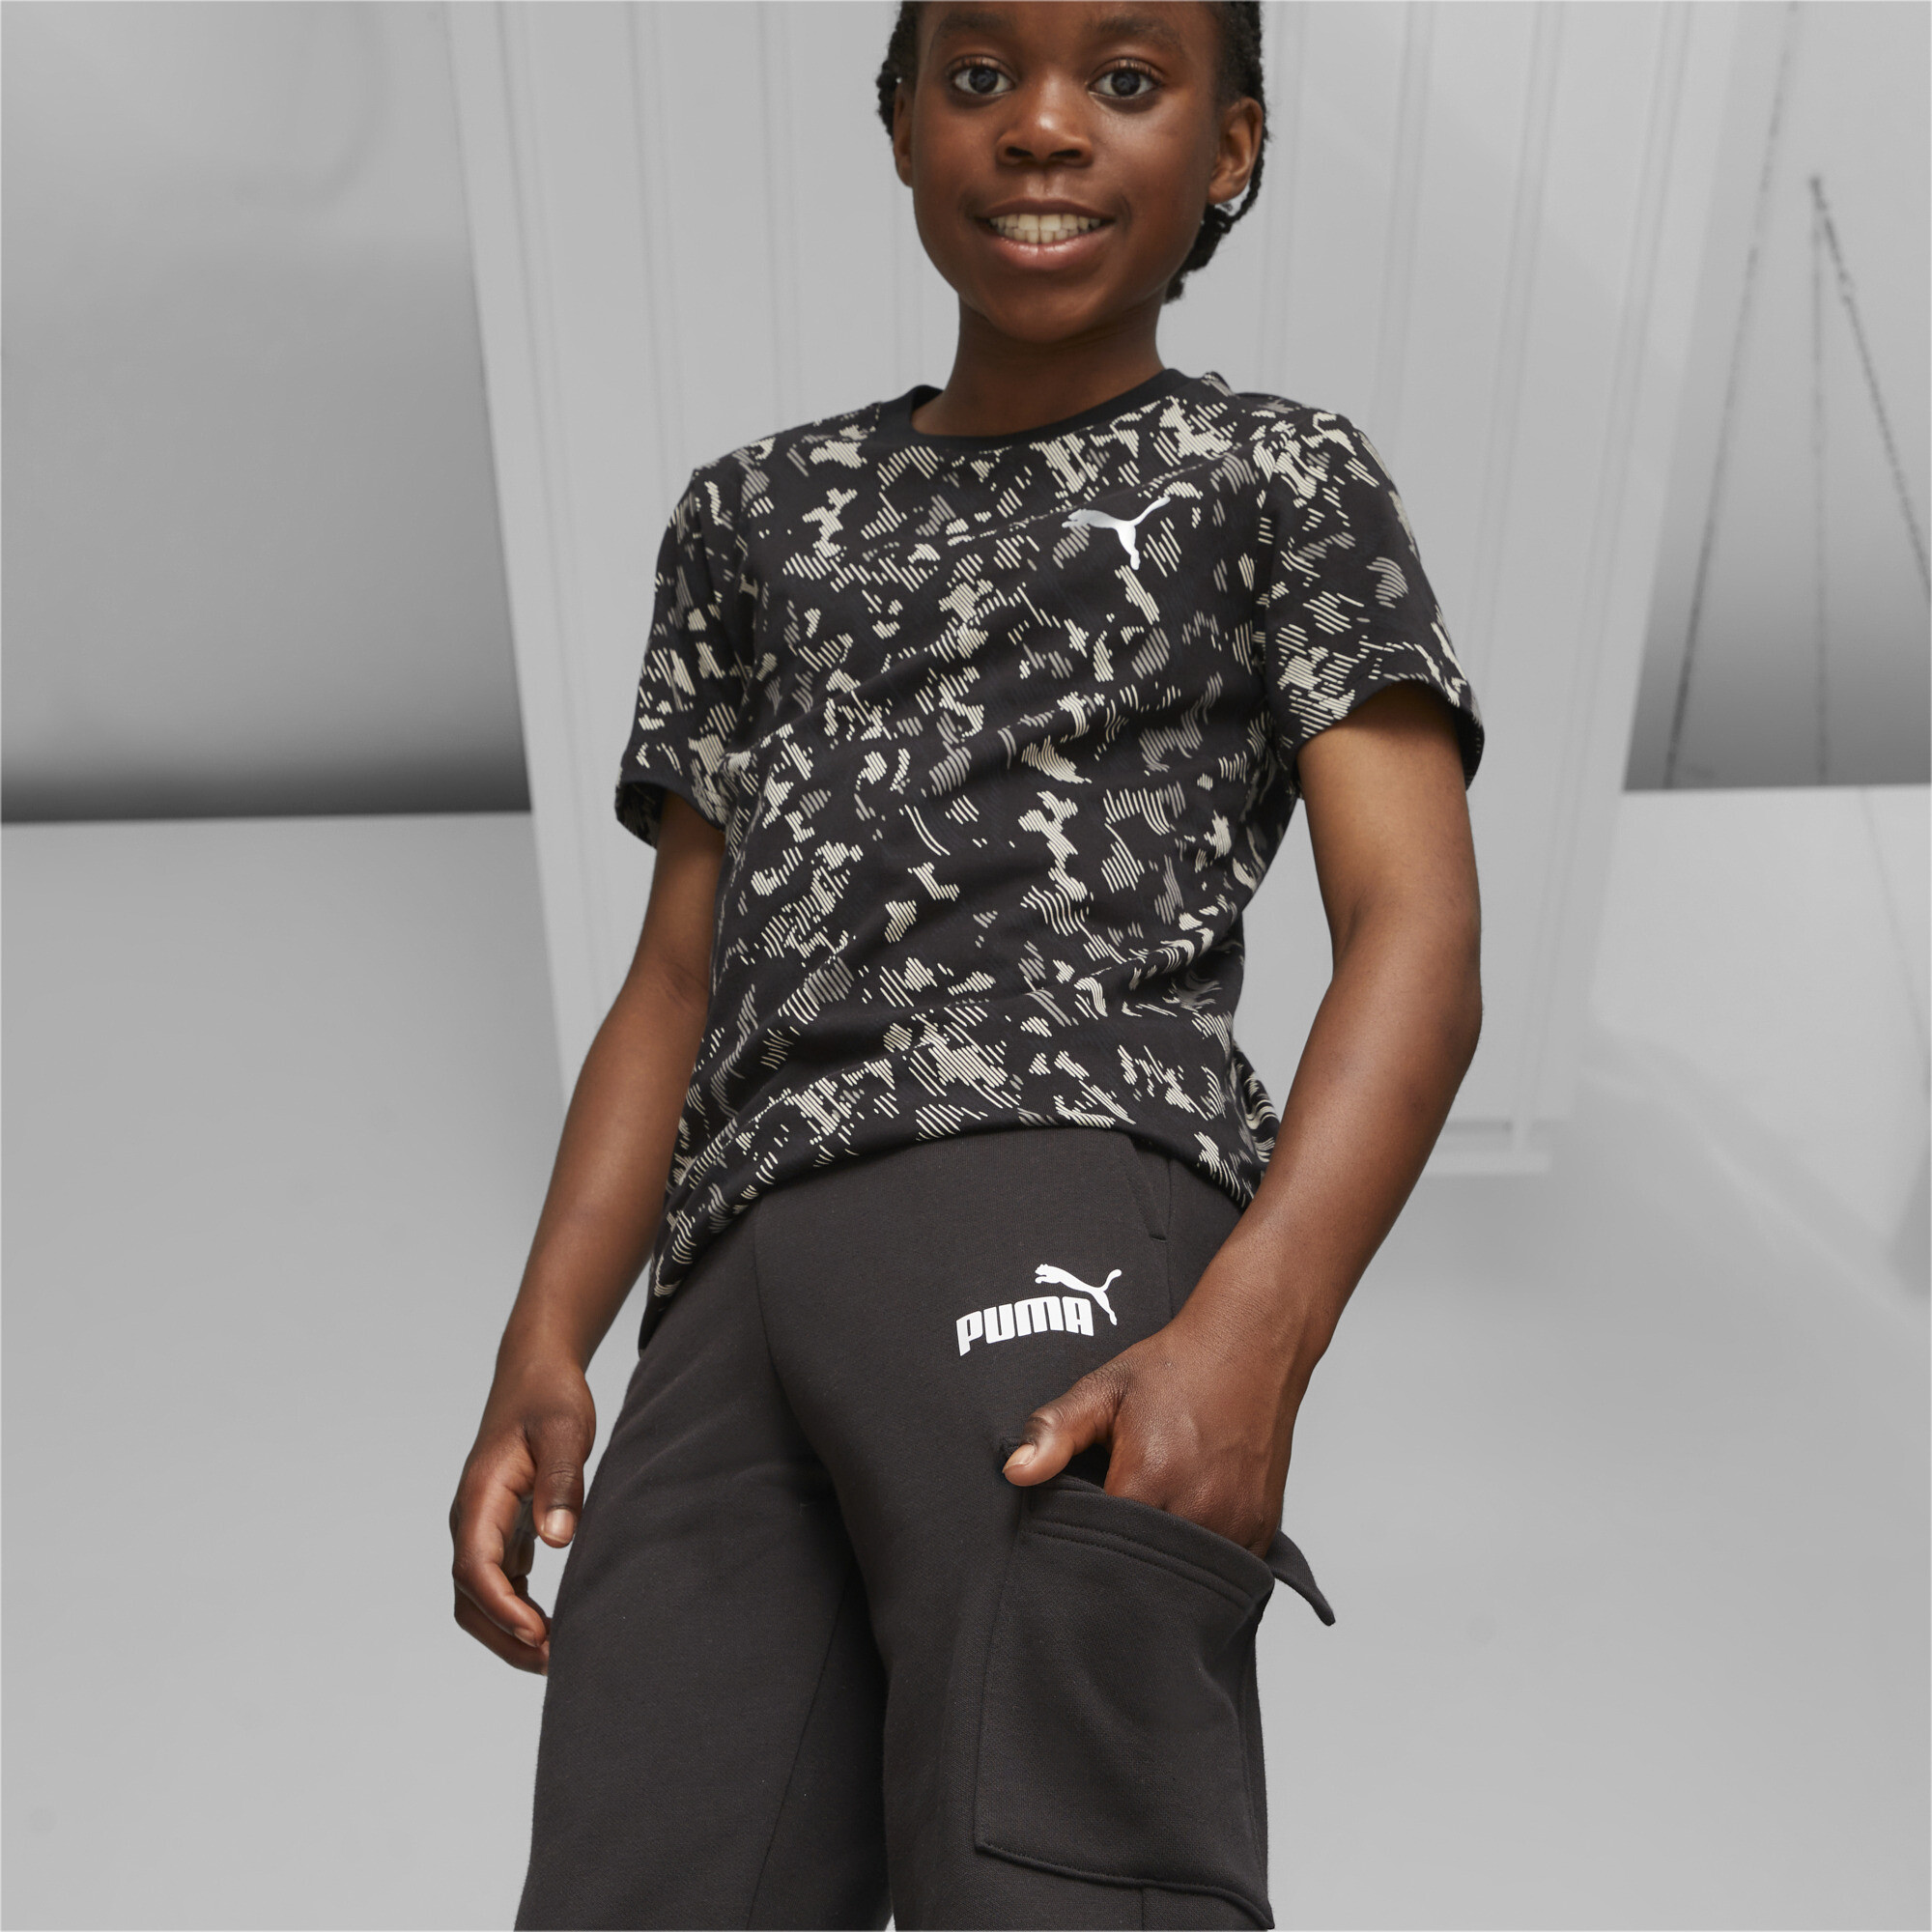 Men's Puma Essentials Youth Cargo Pants, Black, Size 7-8Y, Clothing